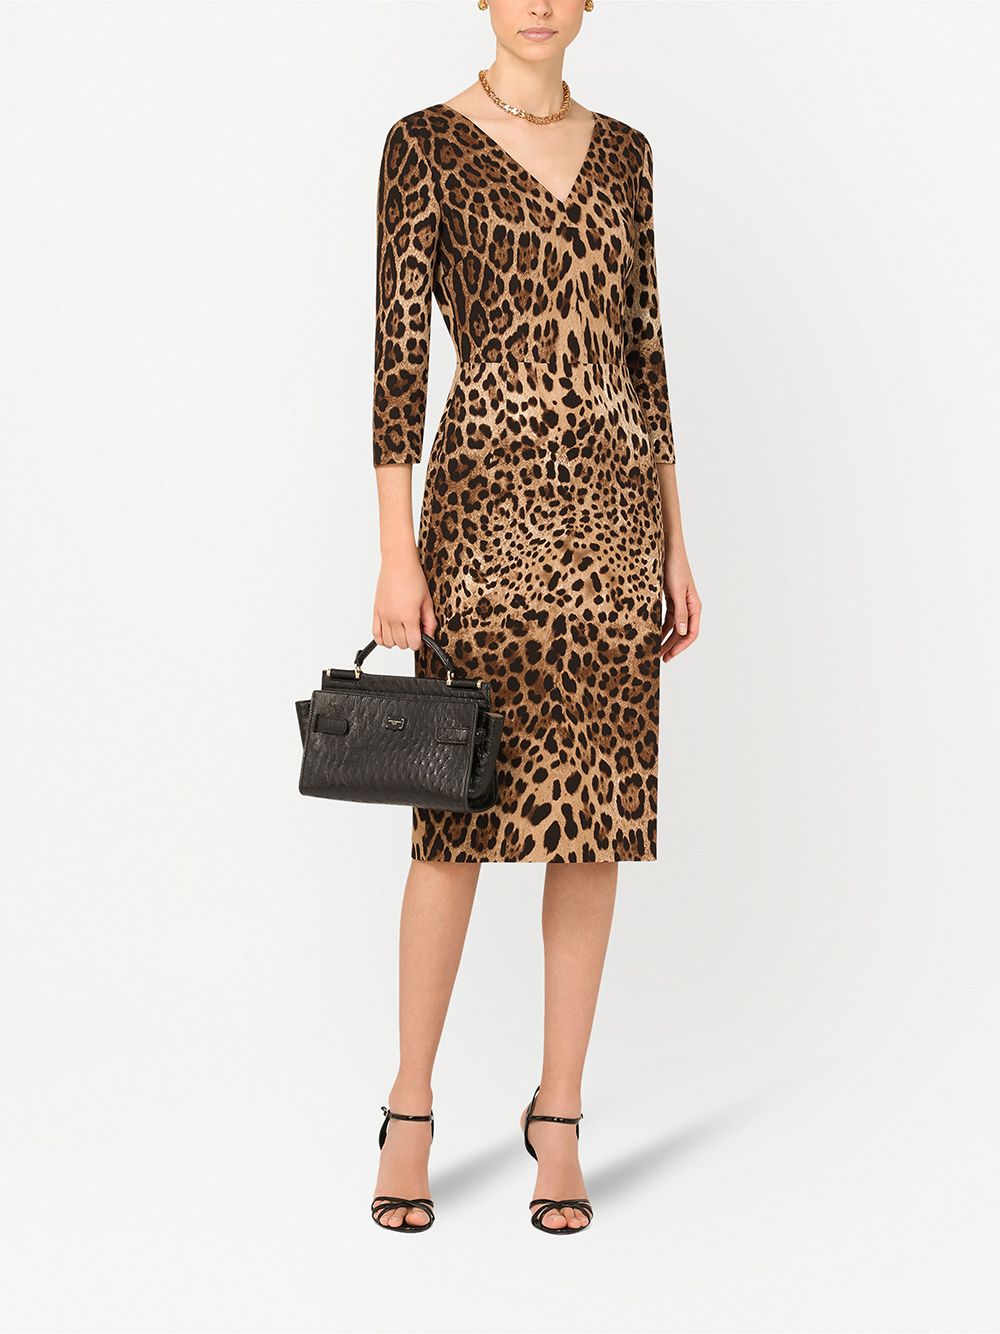 Dolce & Gabbana Fitted Leopard Print Dress - Farfetch